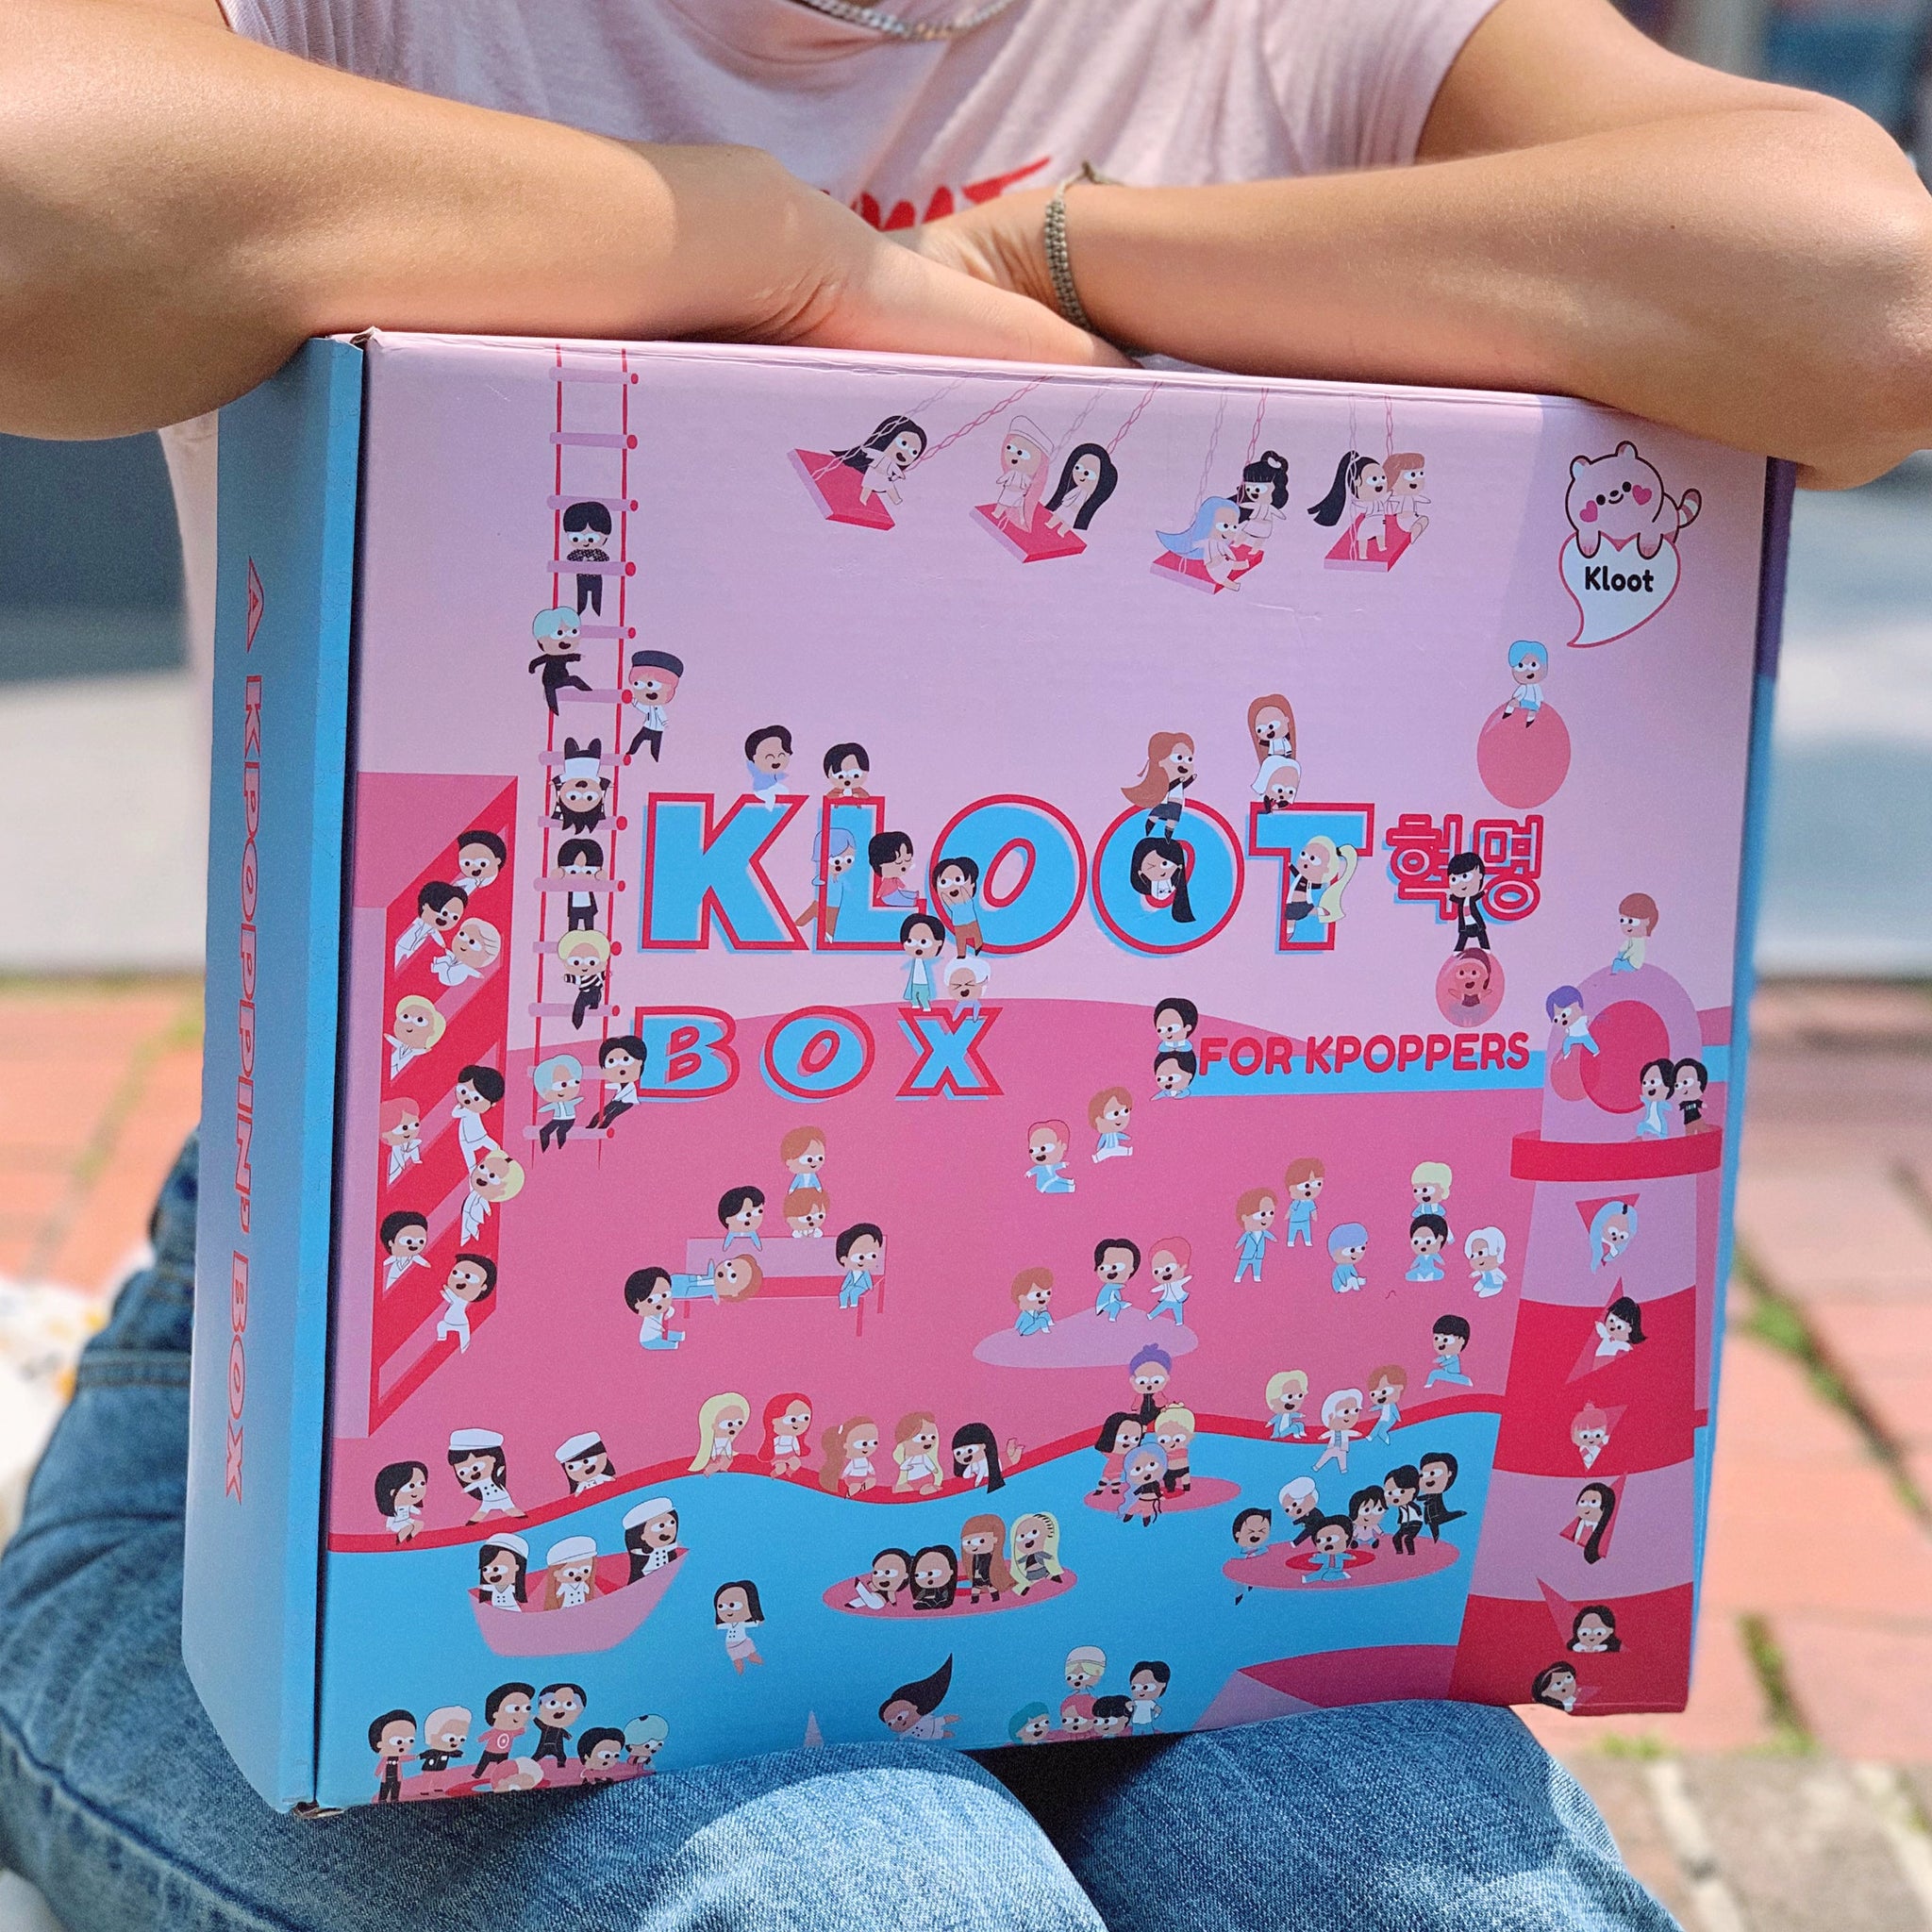 THE KPOPPER KLOOT BOX